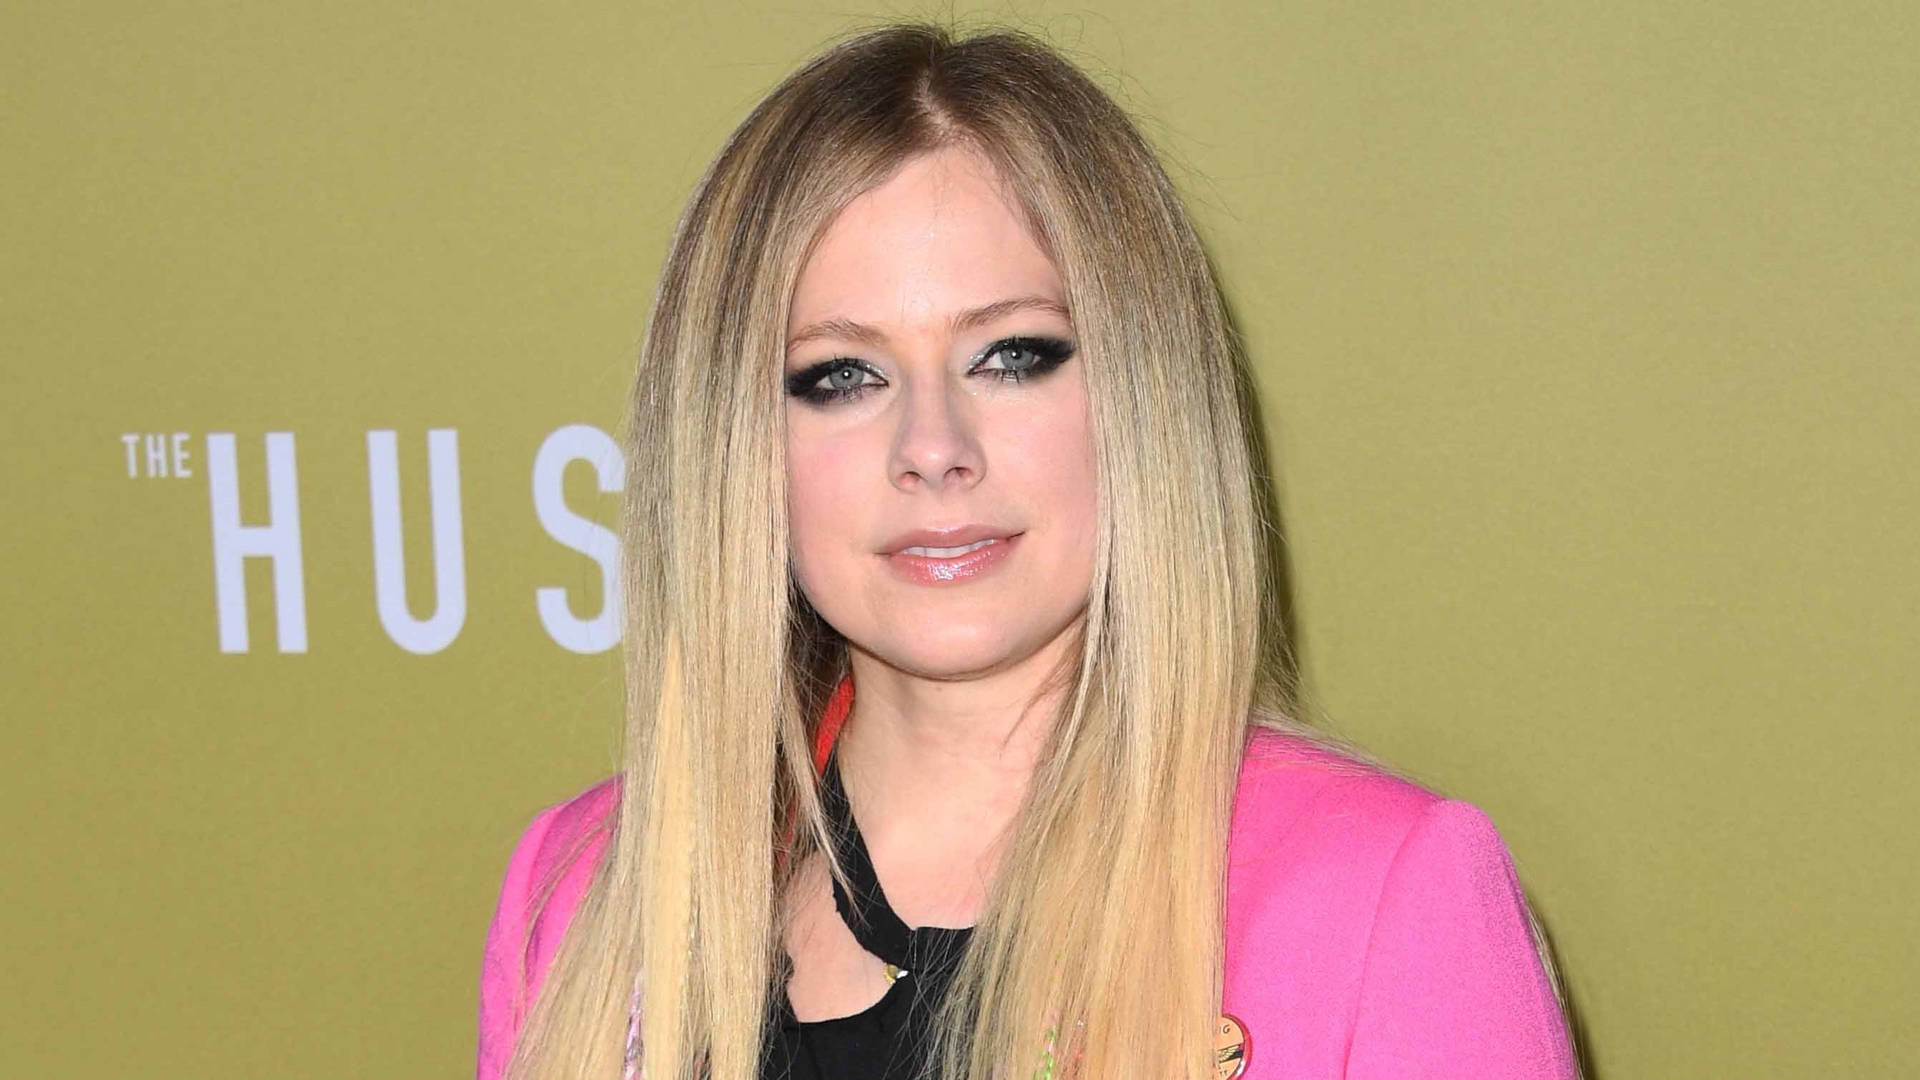 Avril Lavigne The Hustle Wallpaper